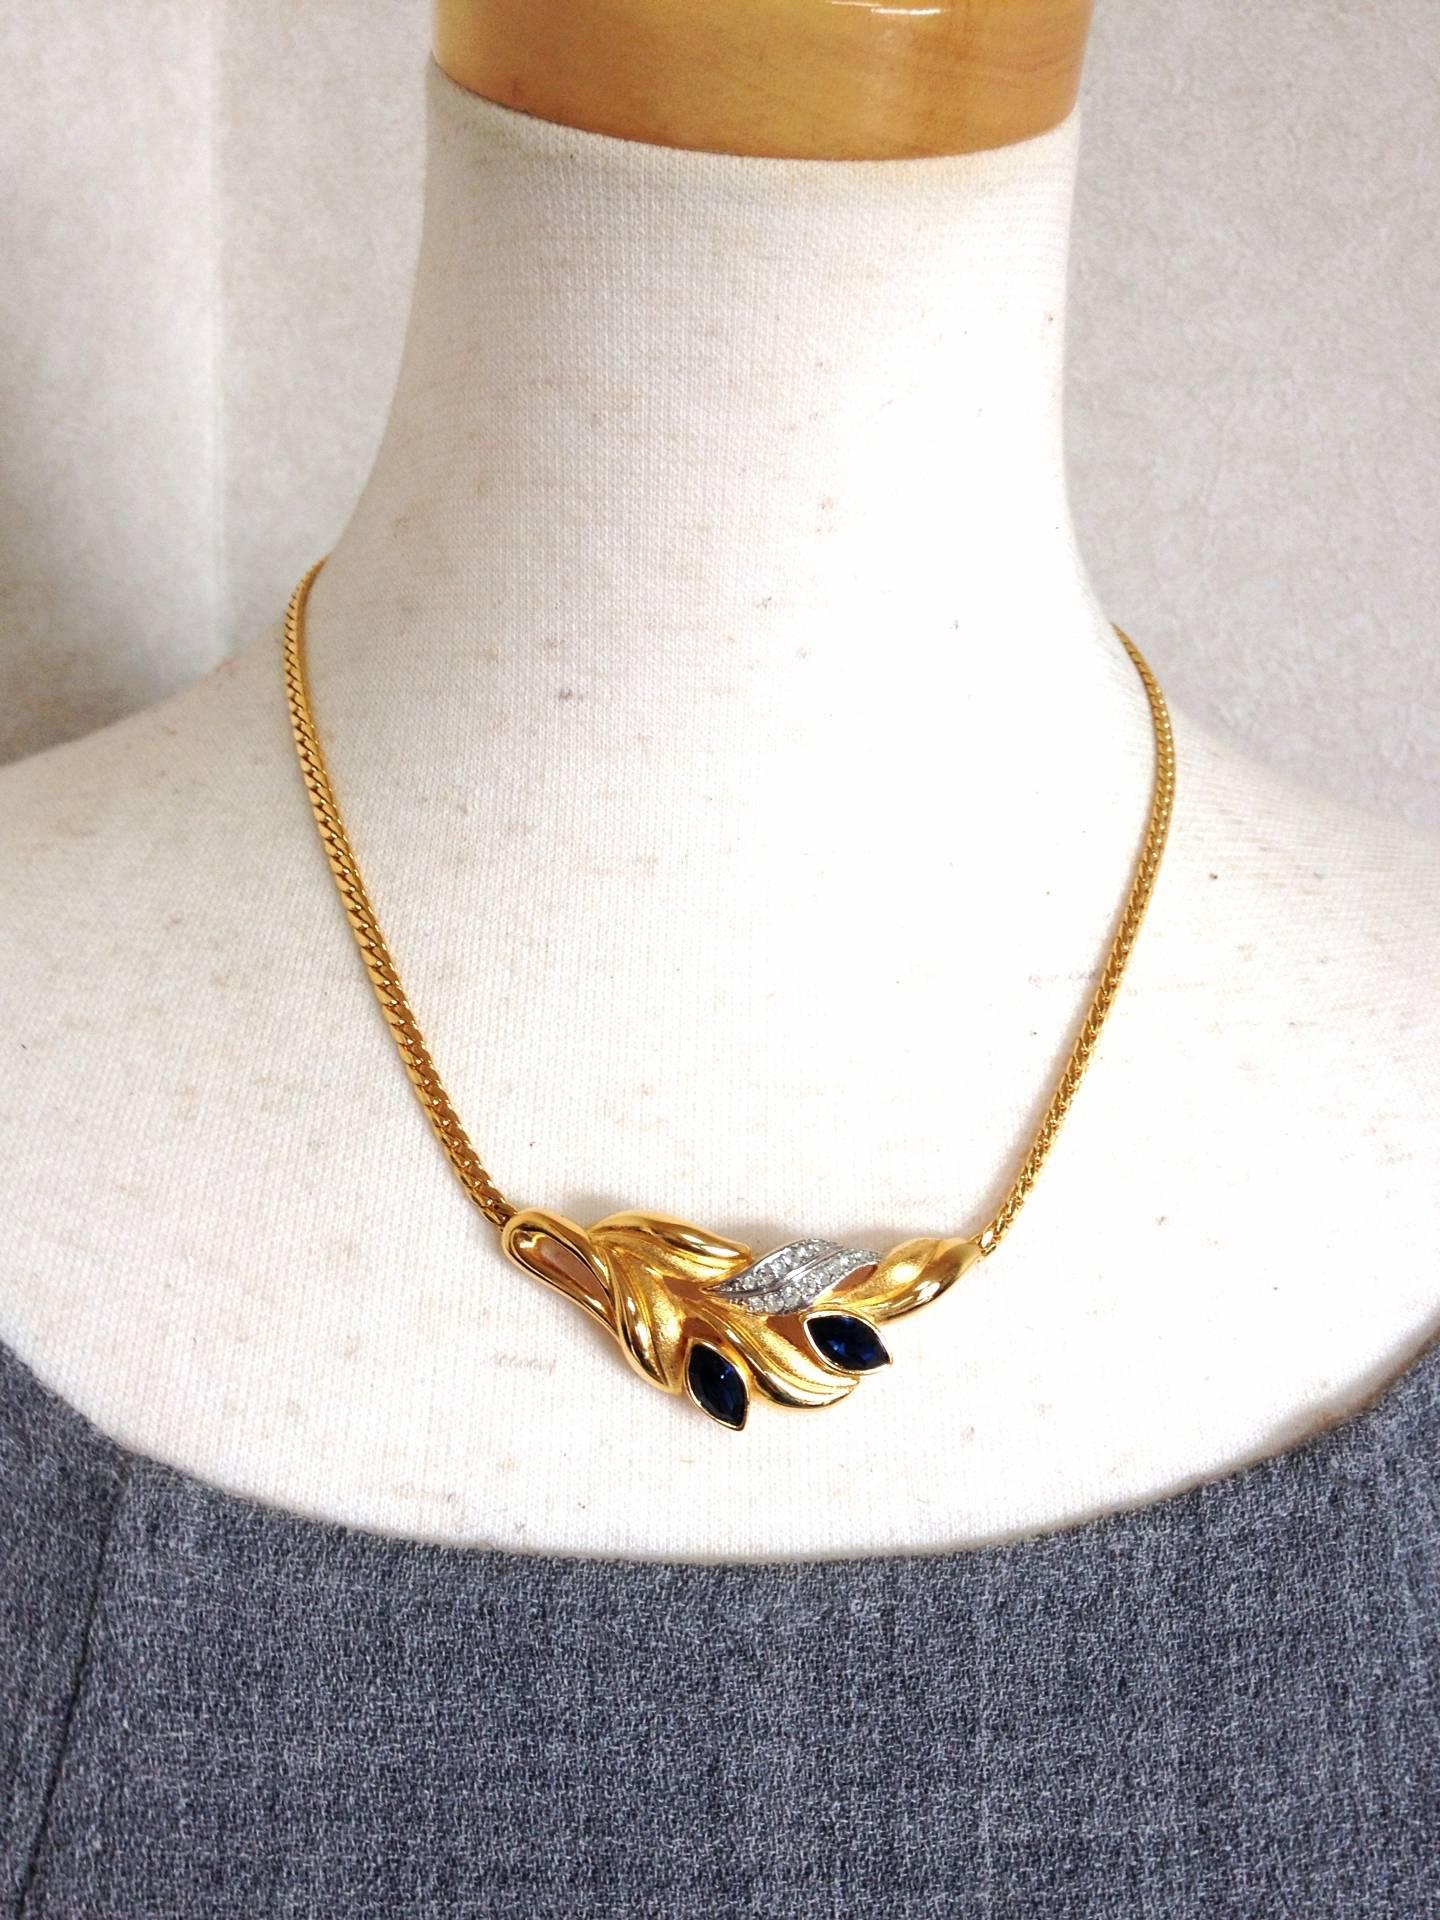 Vintage LANVIN golden chain skinny necklace with golden leaf motif pendant top For Sale 2